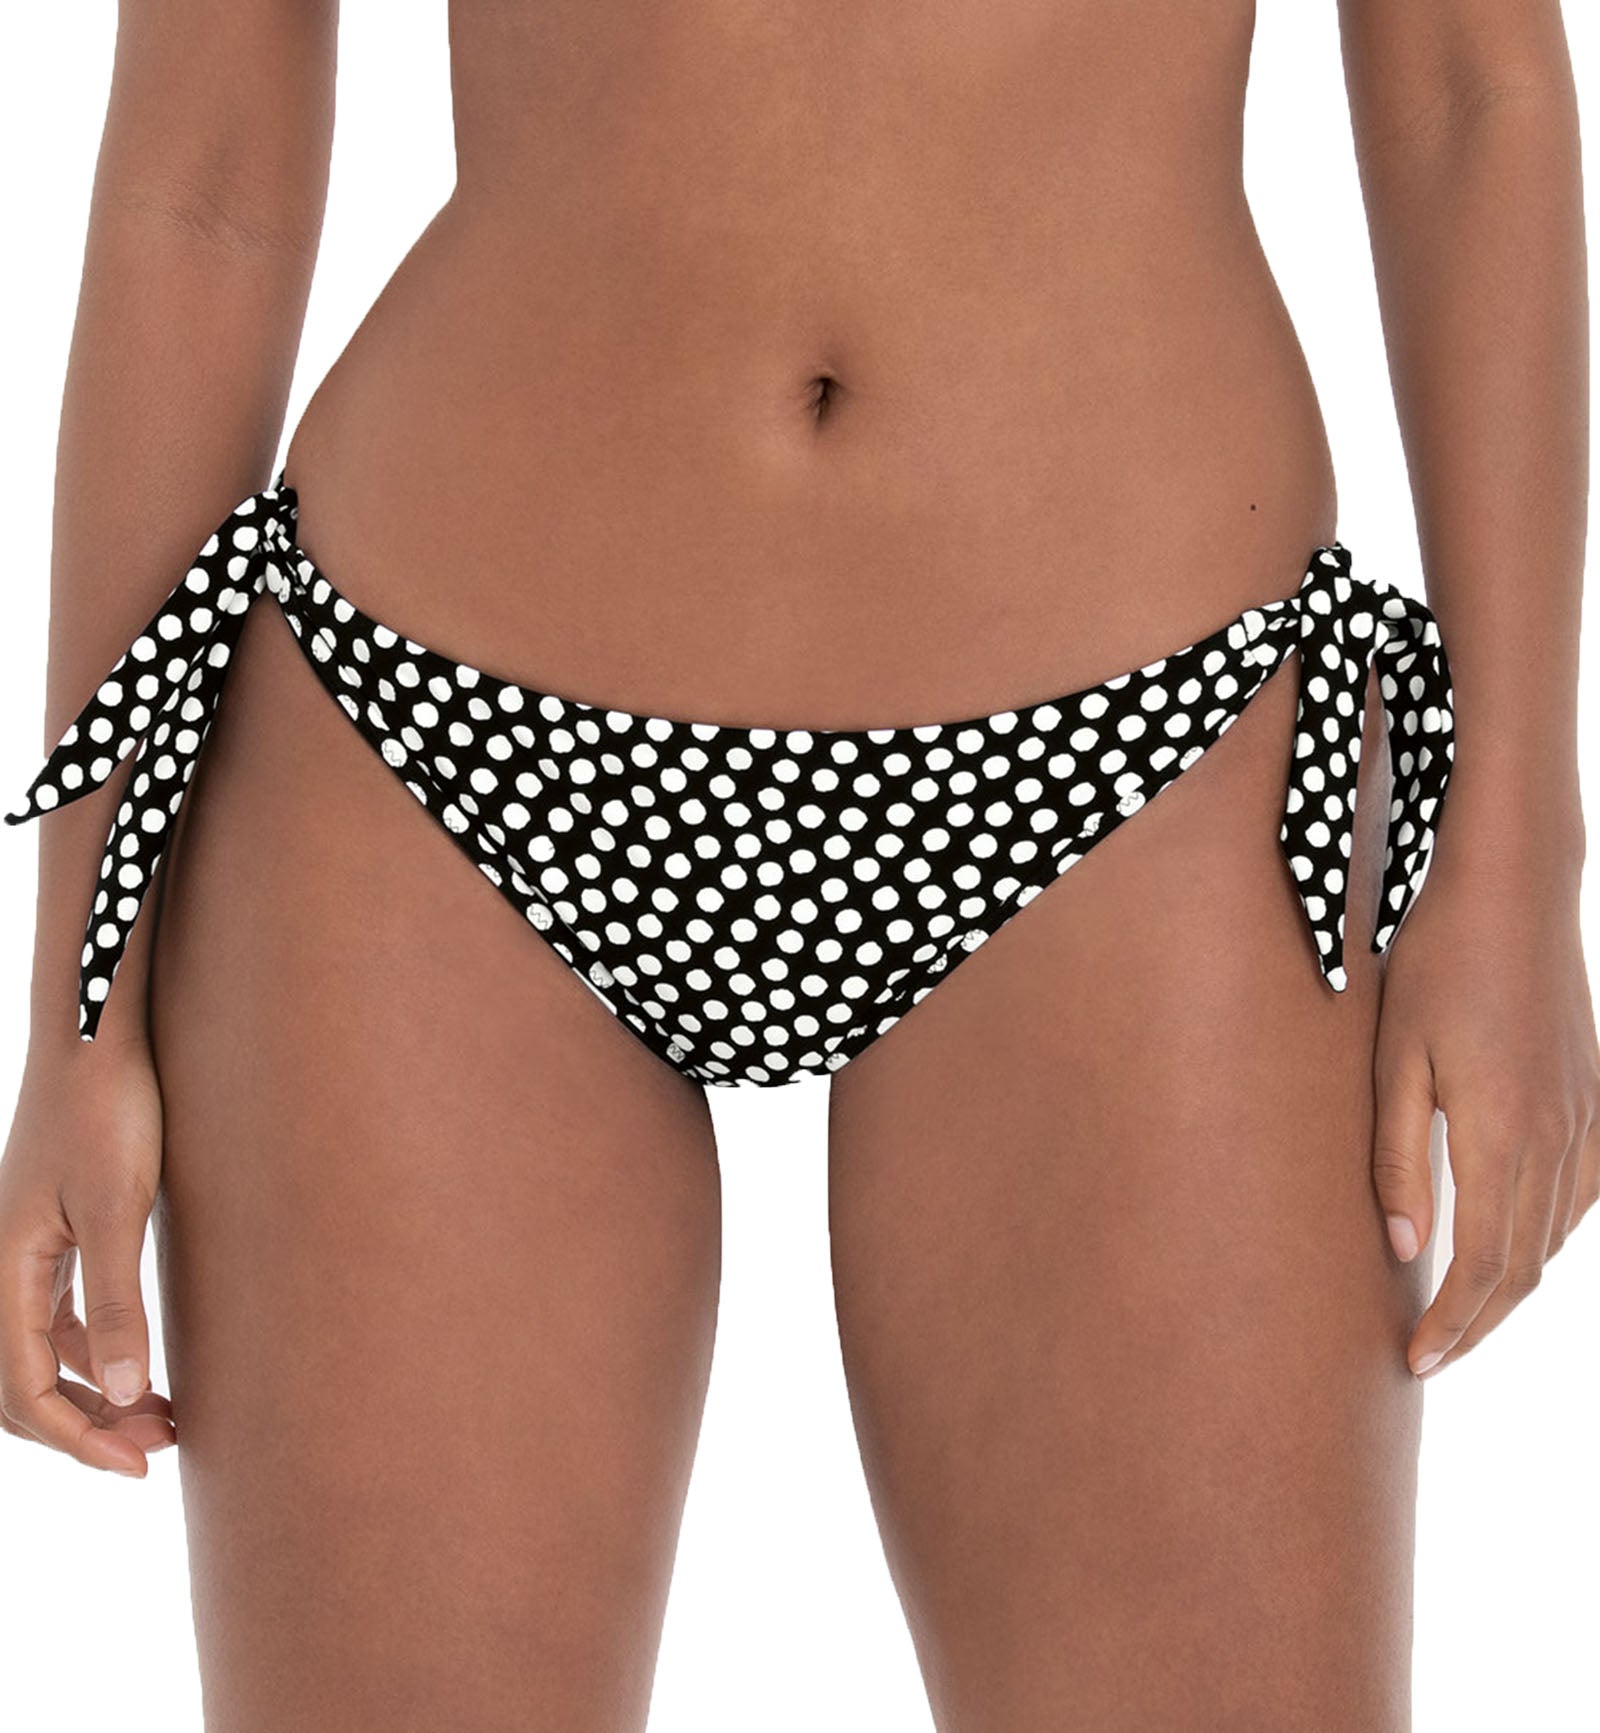 Anita Summer Dot Mimi Reversible Tie Side Swim Bottom (8790-0),Small,Black/White - Black/White,Small